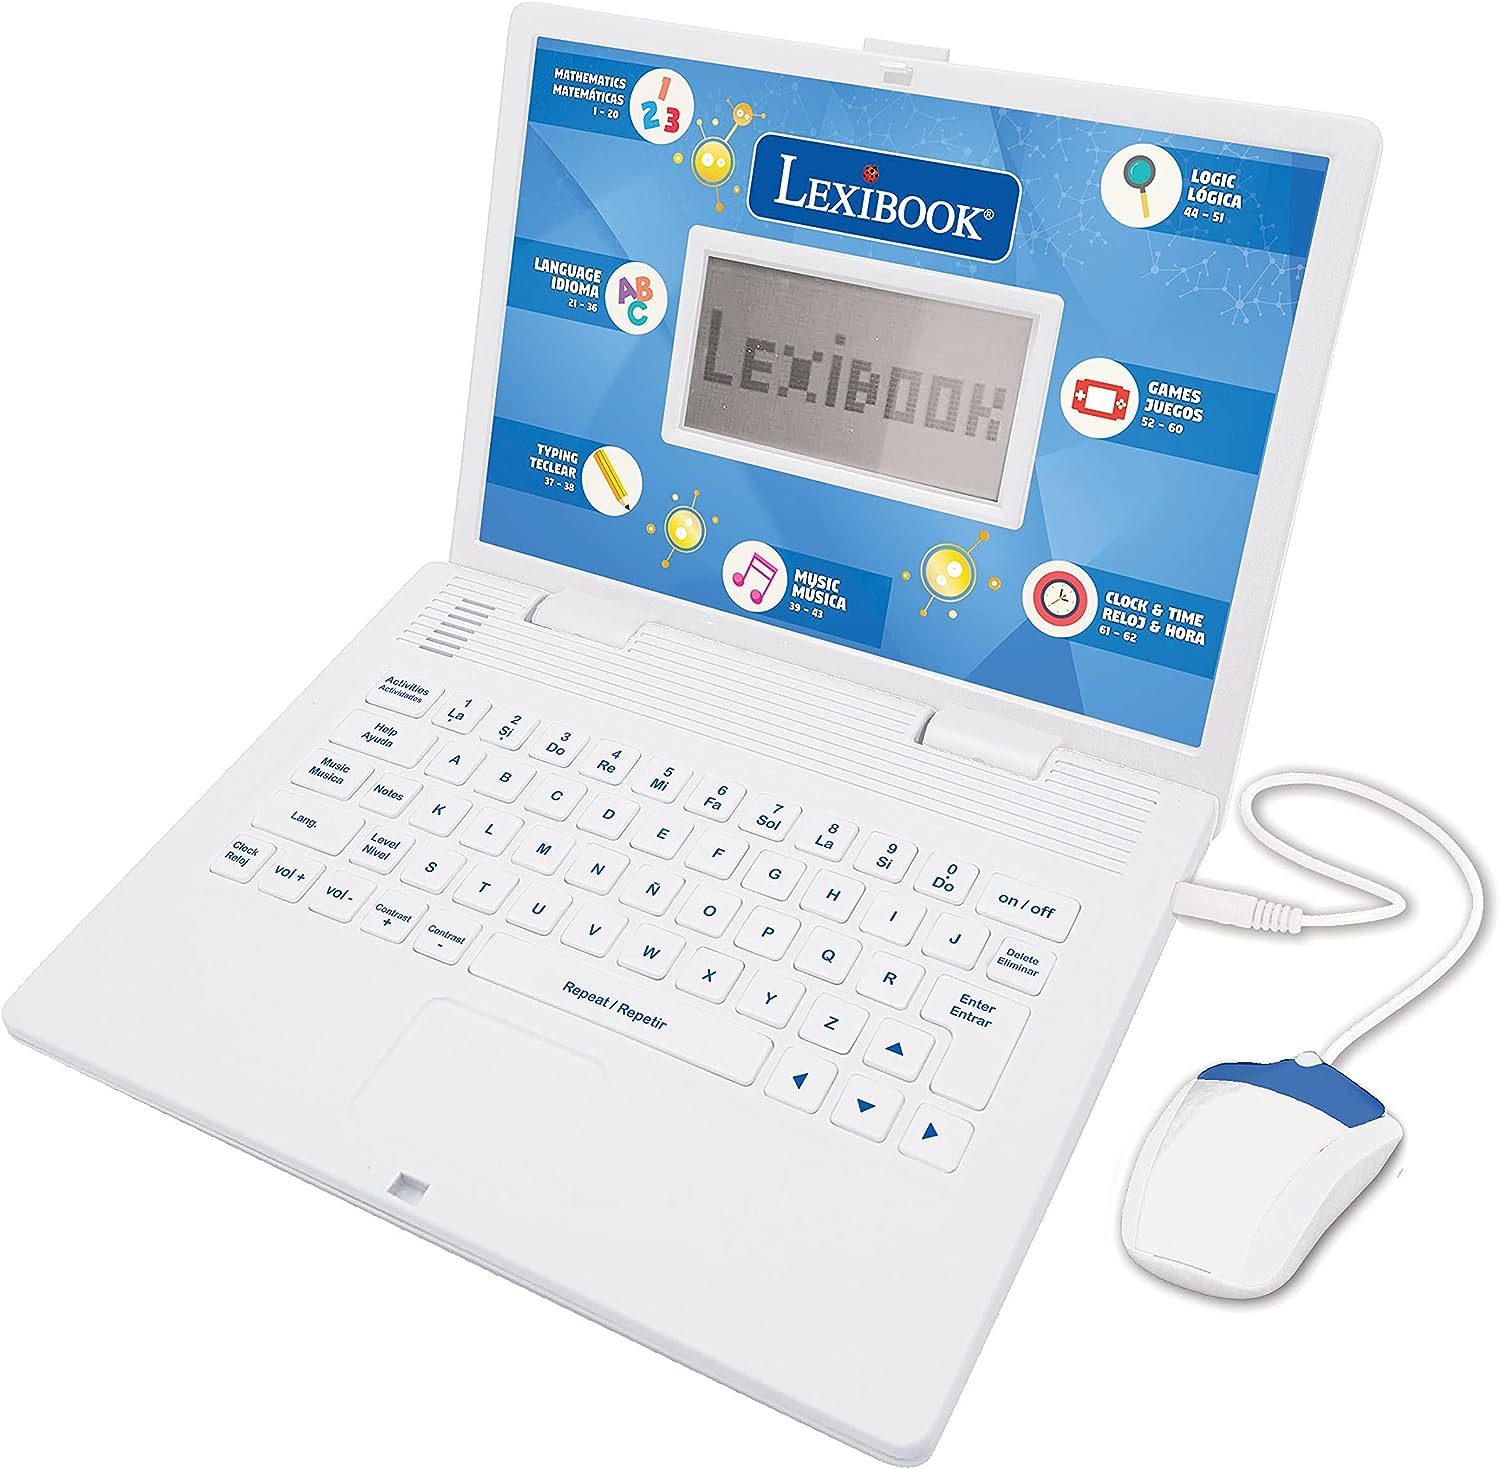 Lexibook - Educational and Bilingual Laptop [...]